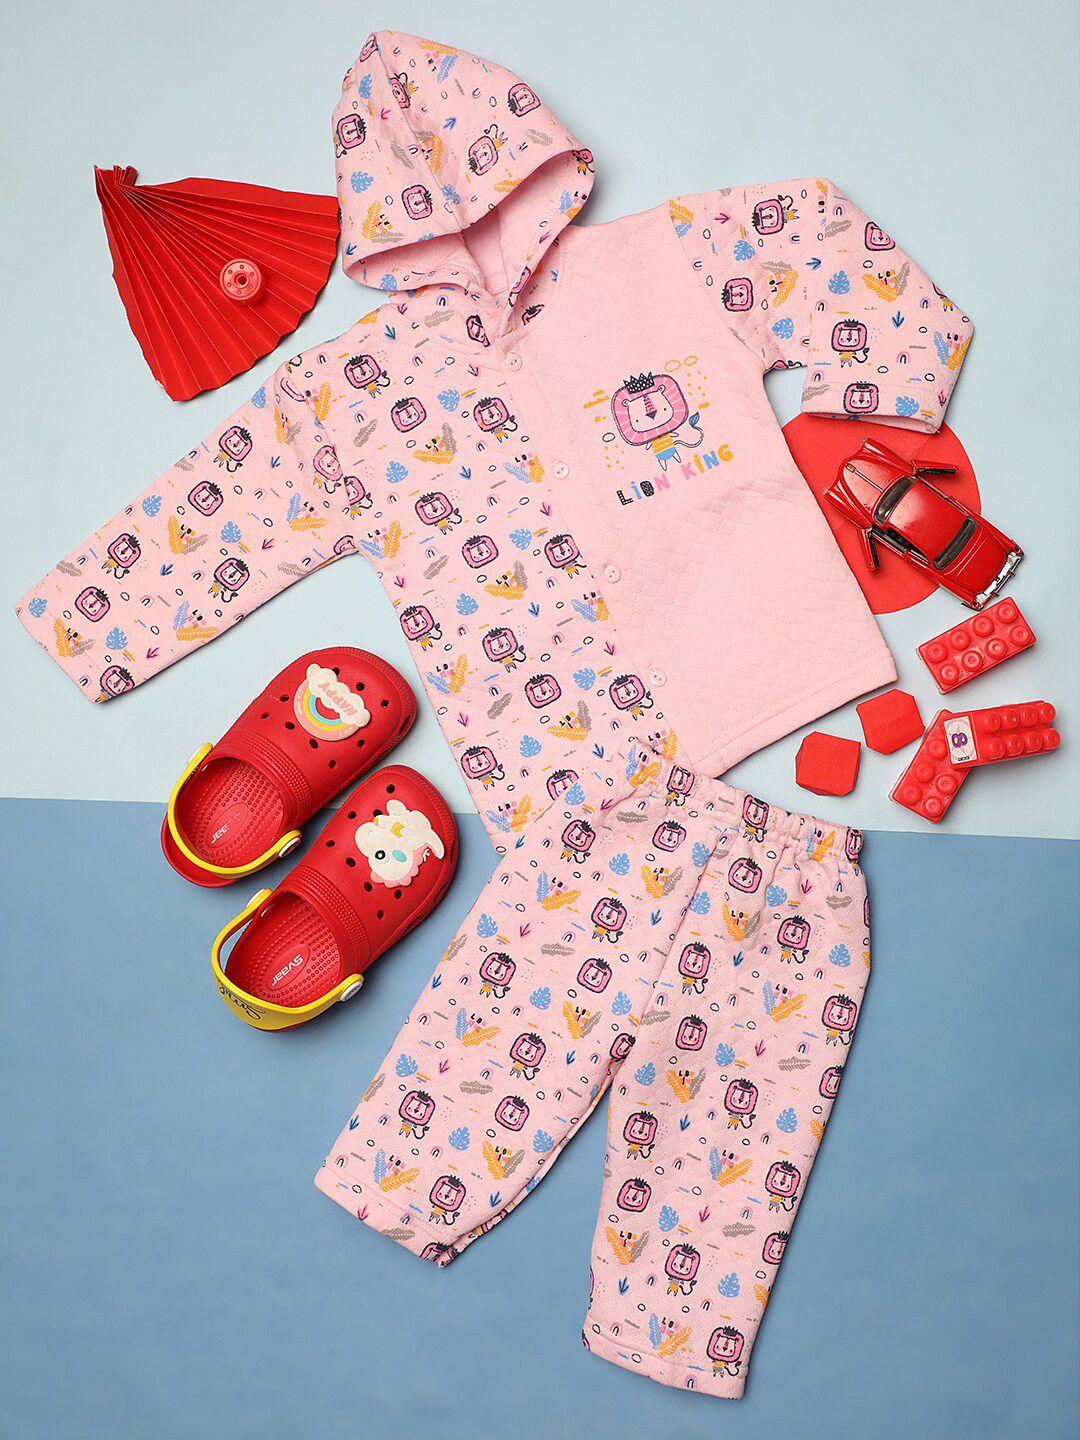 v-mart infants printed hooded shirt with pyjamas